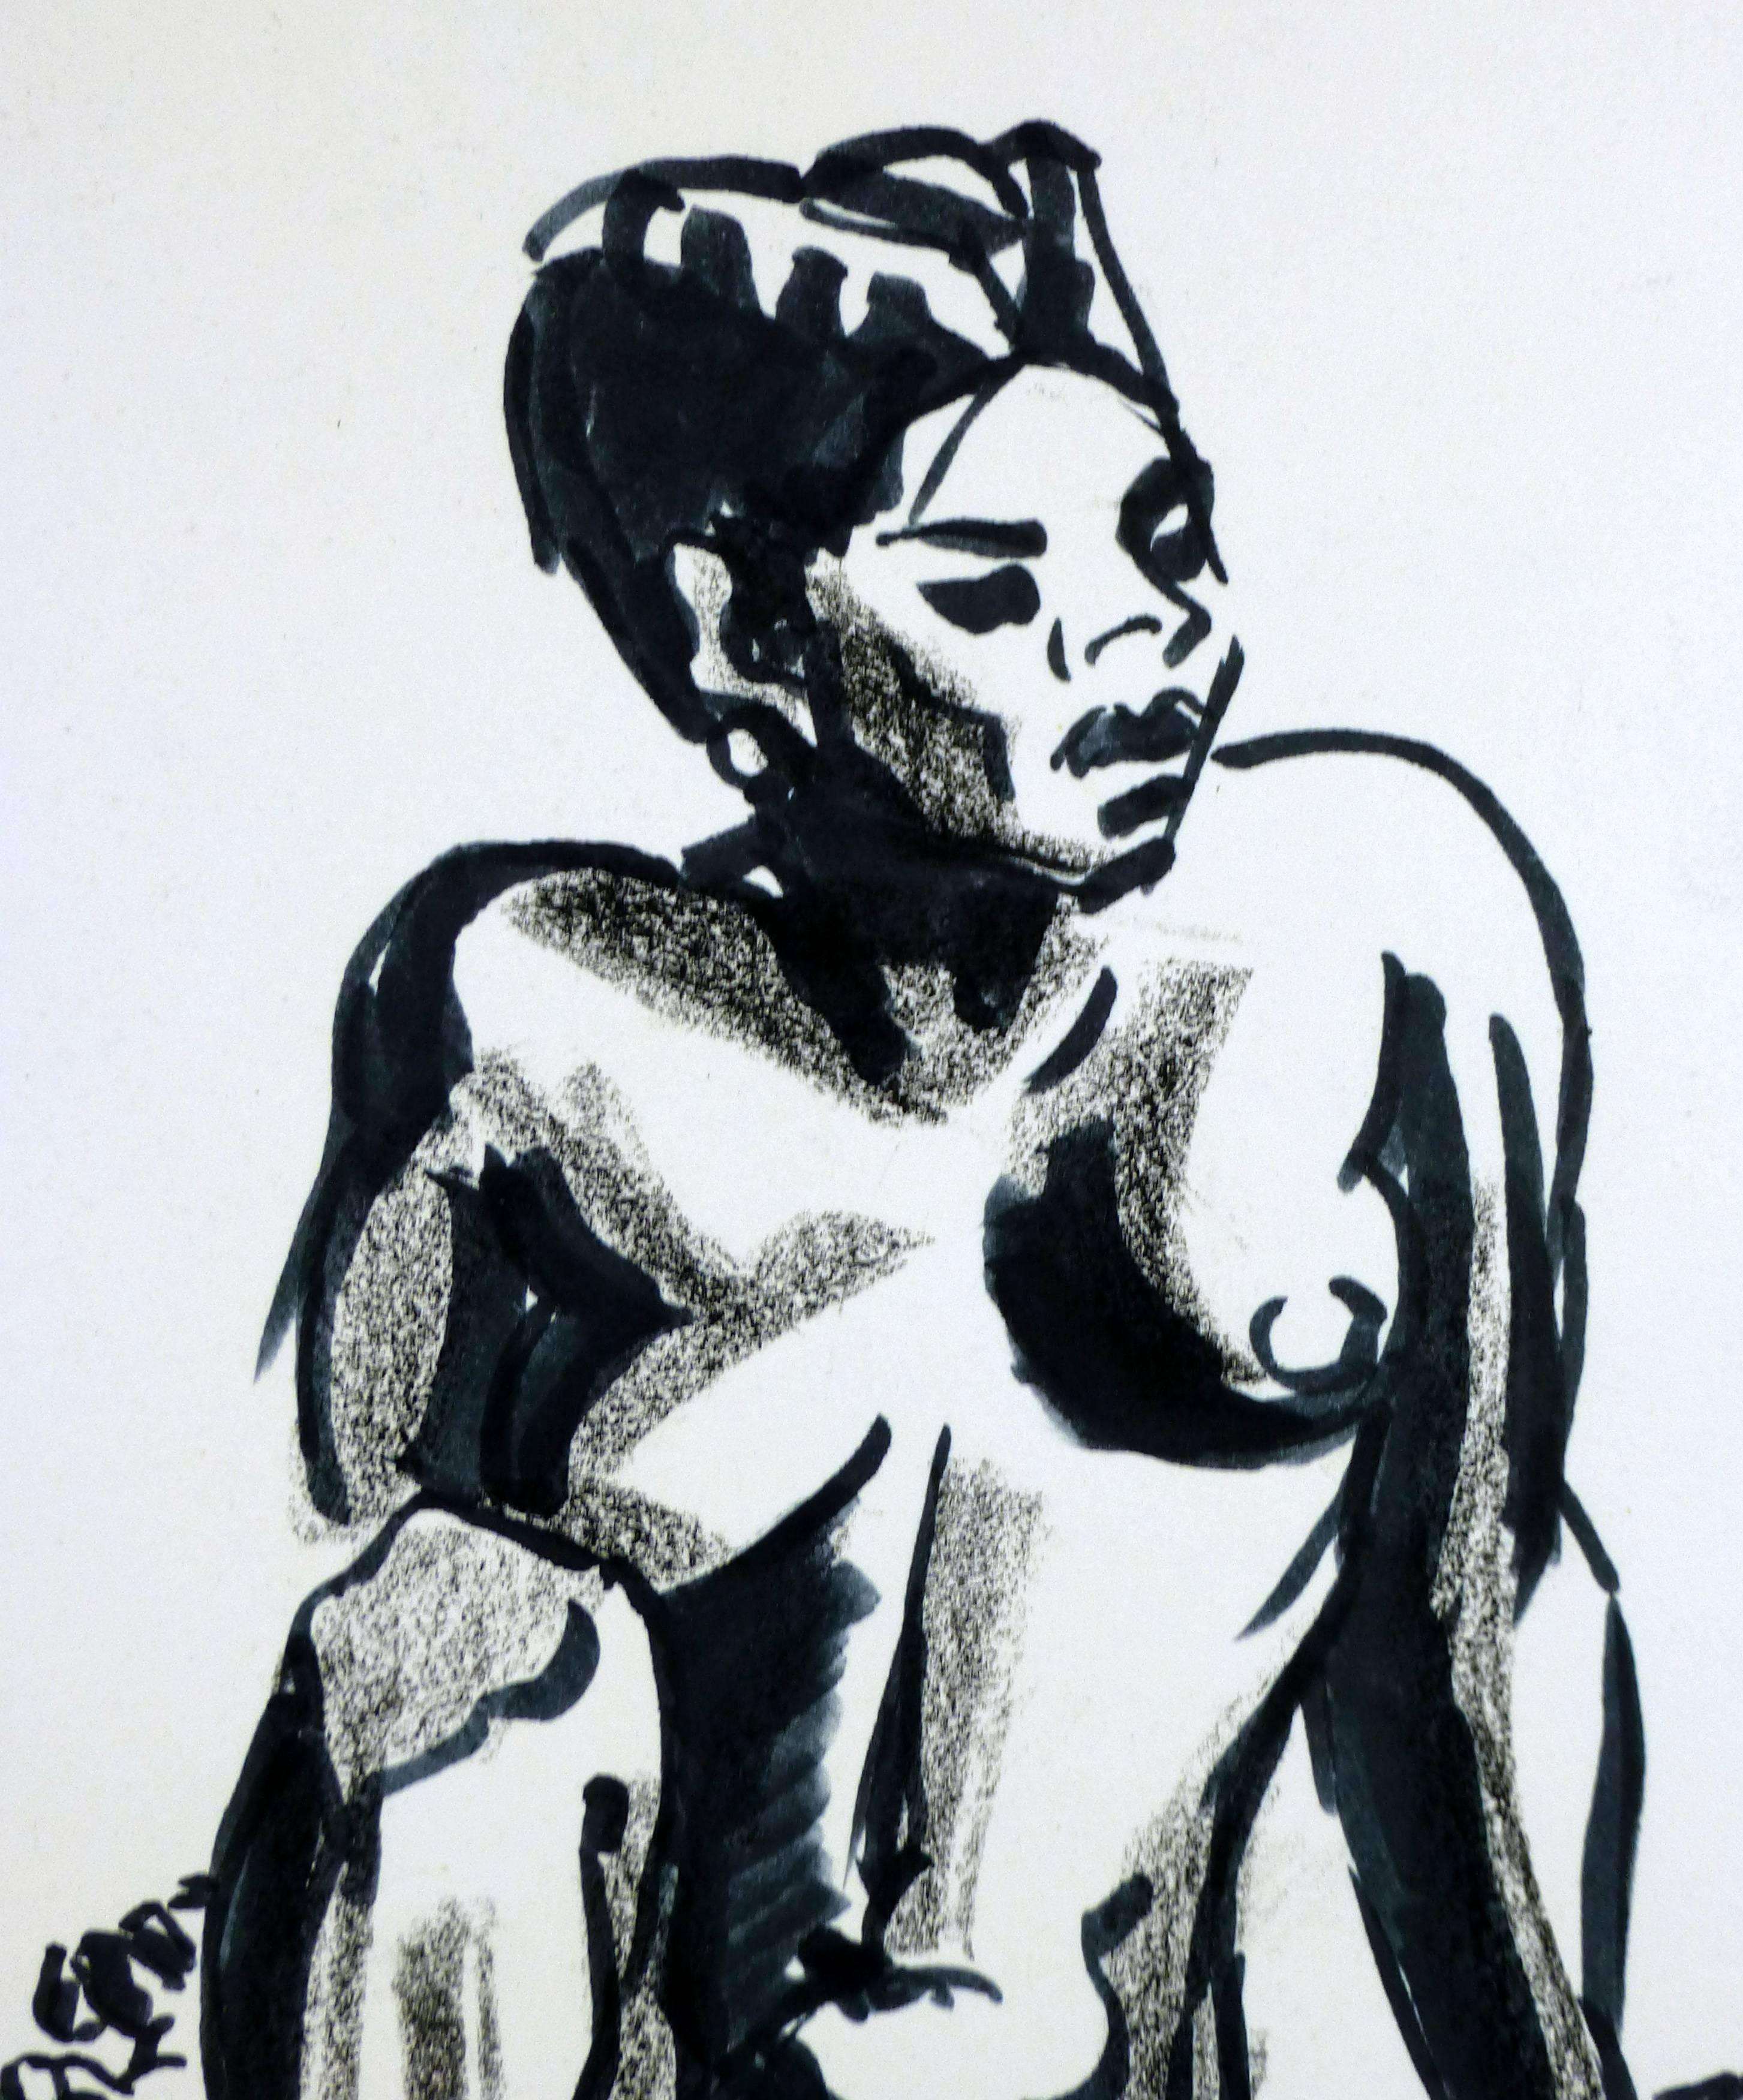 Femme nue couchée II - Art de Unknown